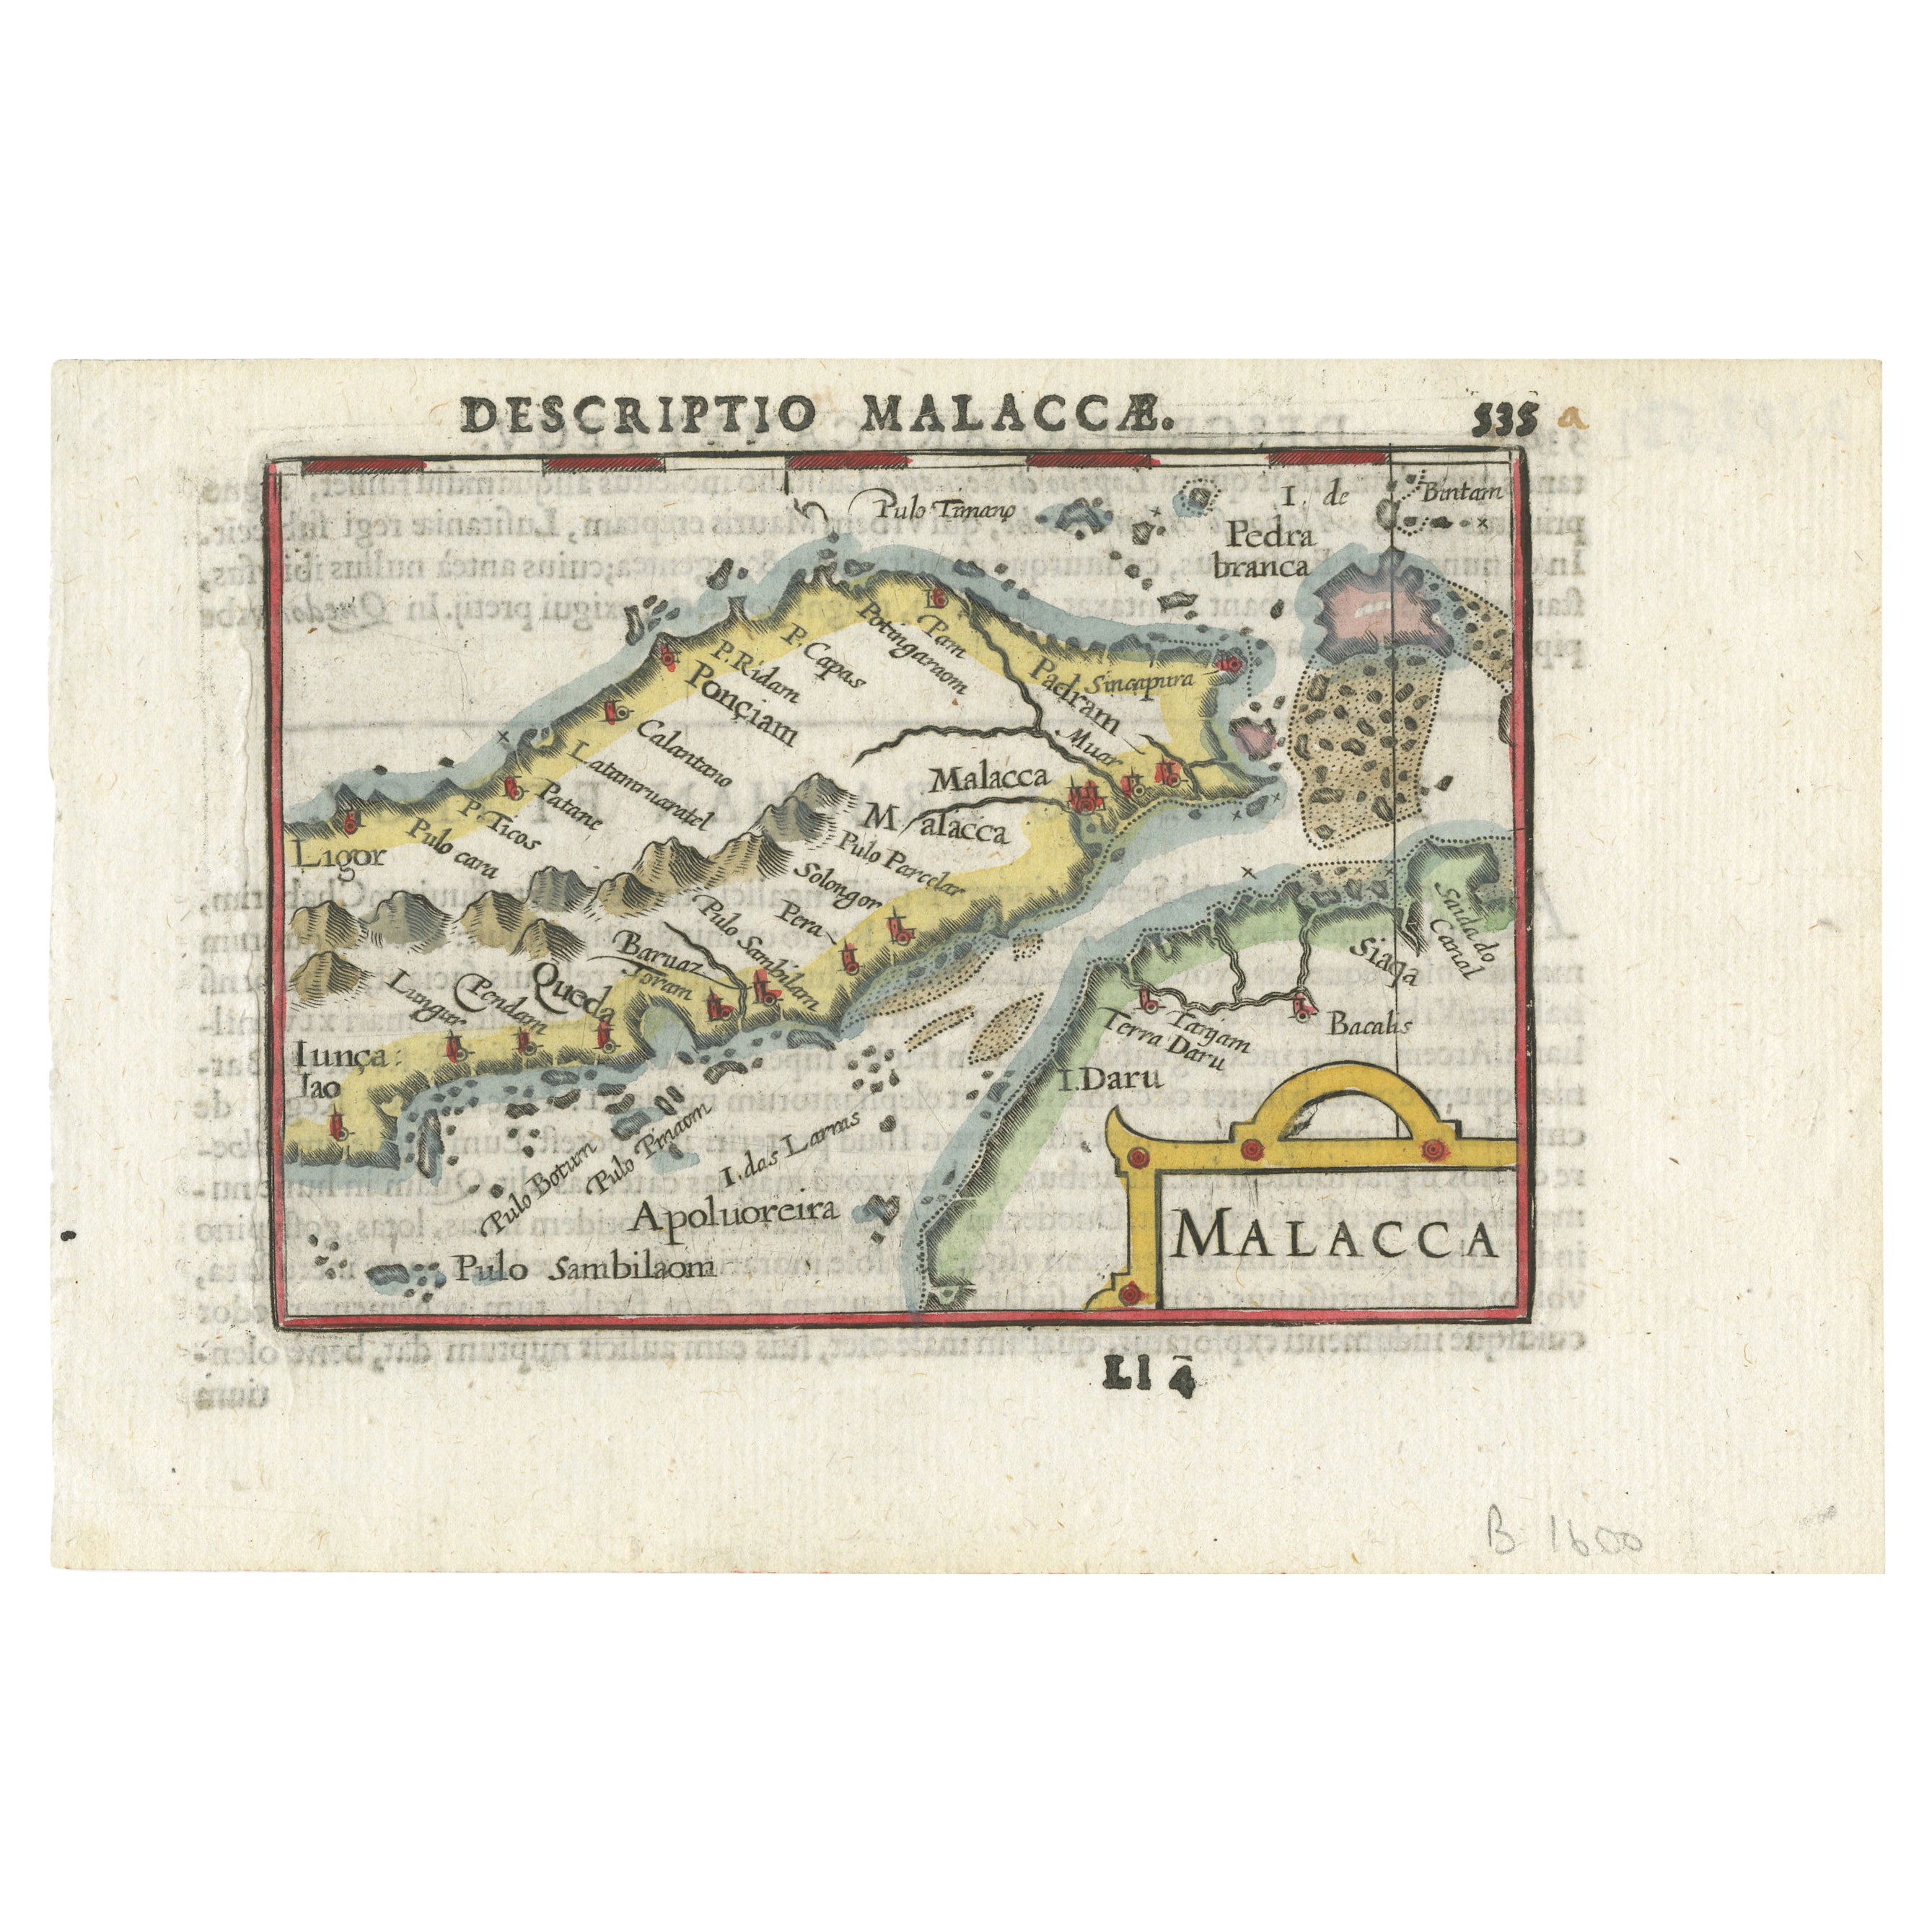 Rare Original Handcolored Miniature Map of Malaysia and Singapore, 1600